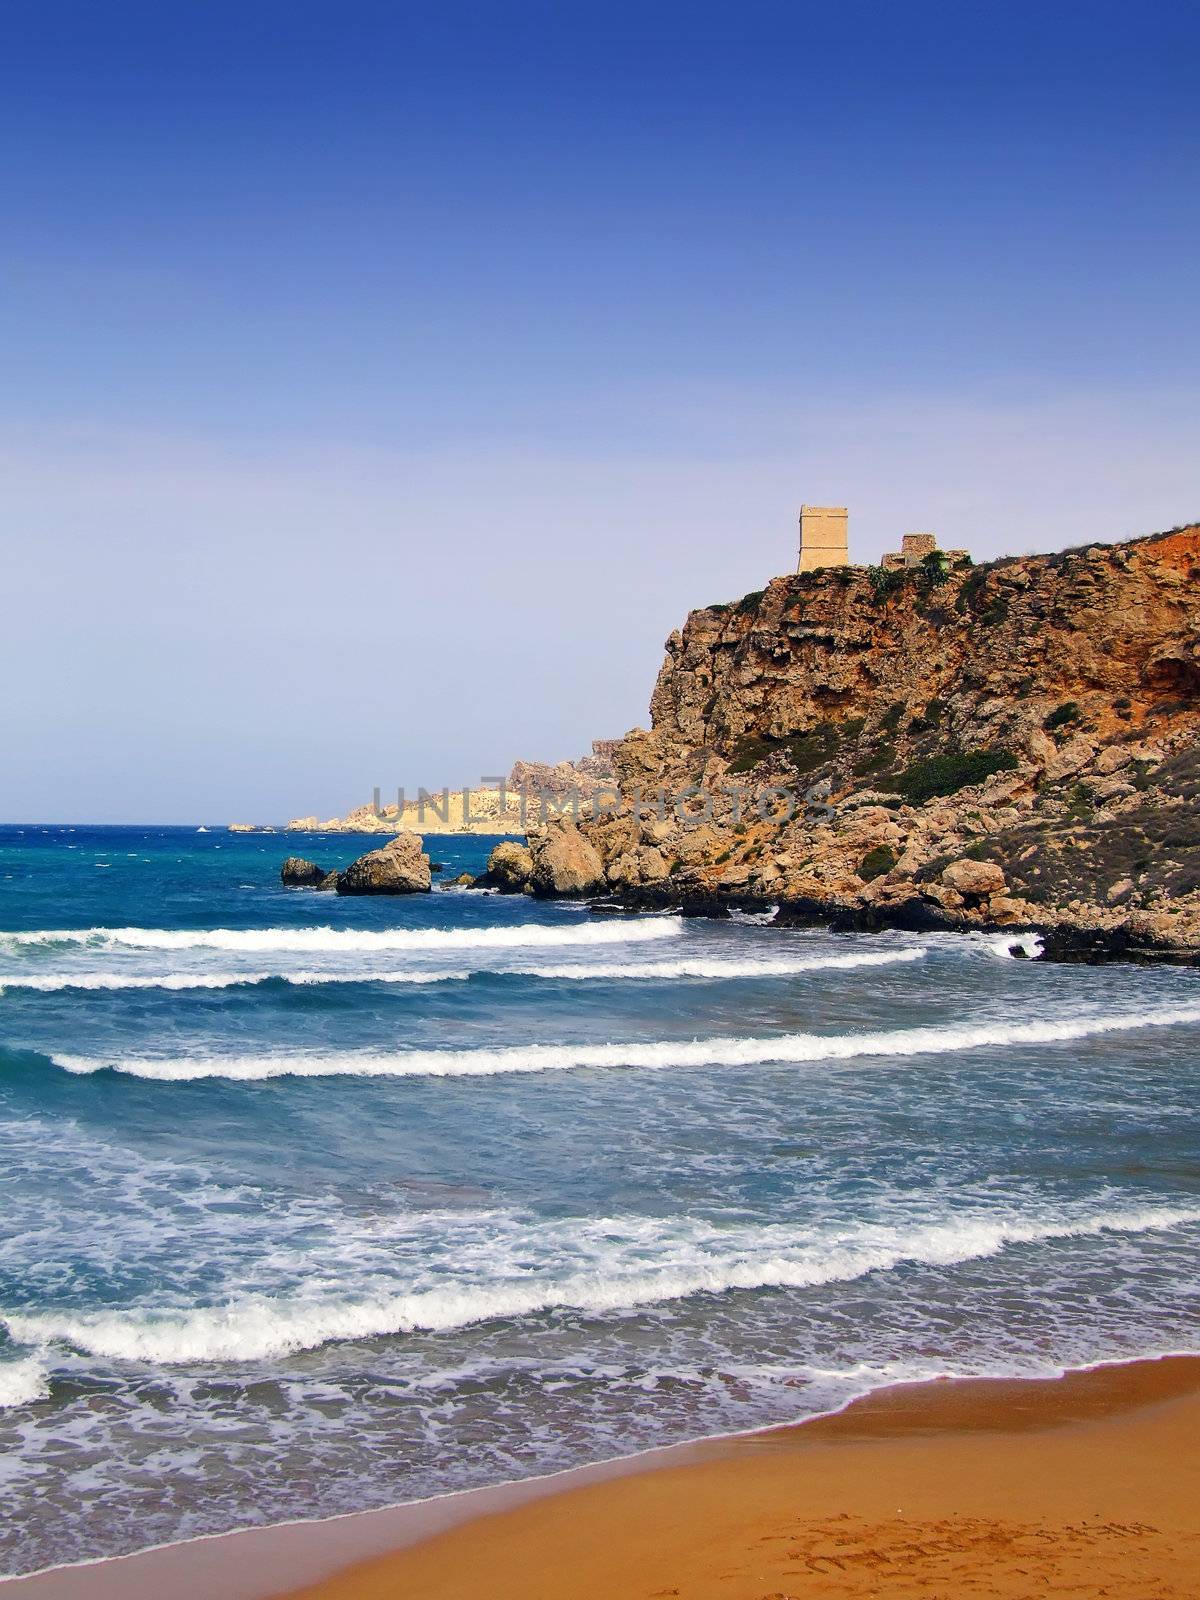 Mediterranean Bliss by PhotoWorks